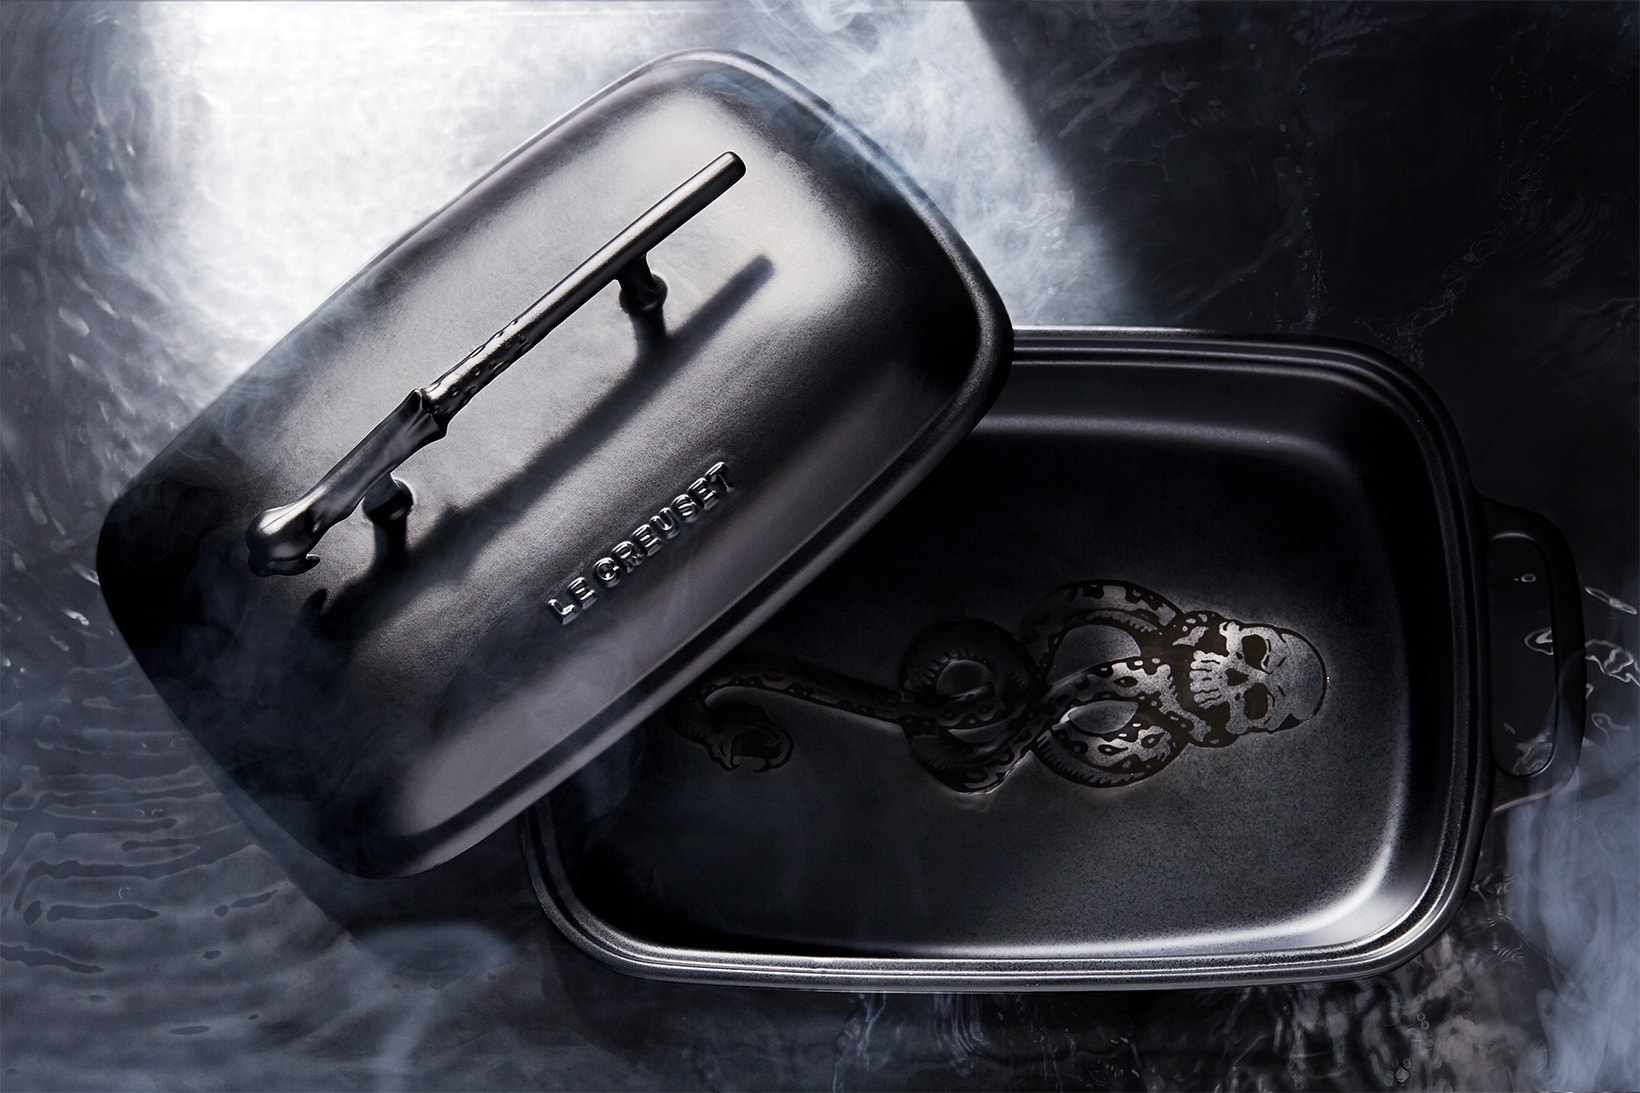 Le Creuset Harry Potter Kitchenware Collaboration Collection cast iron